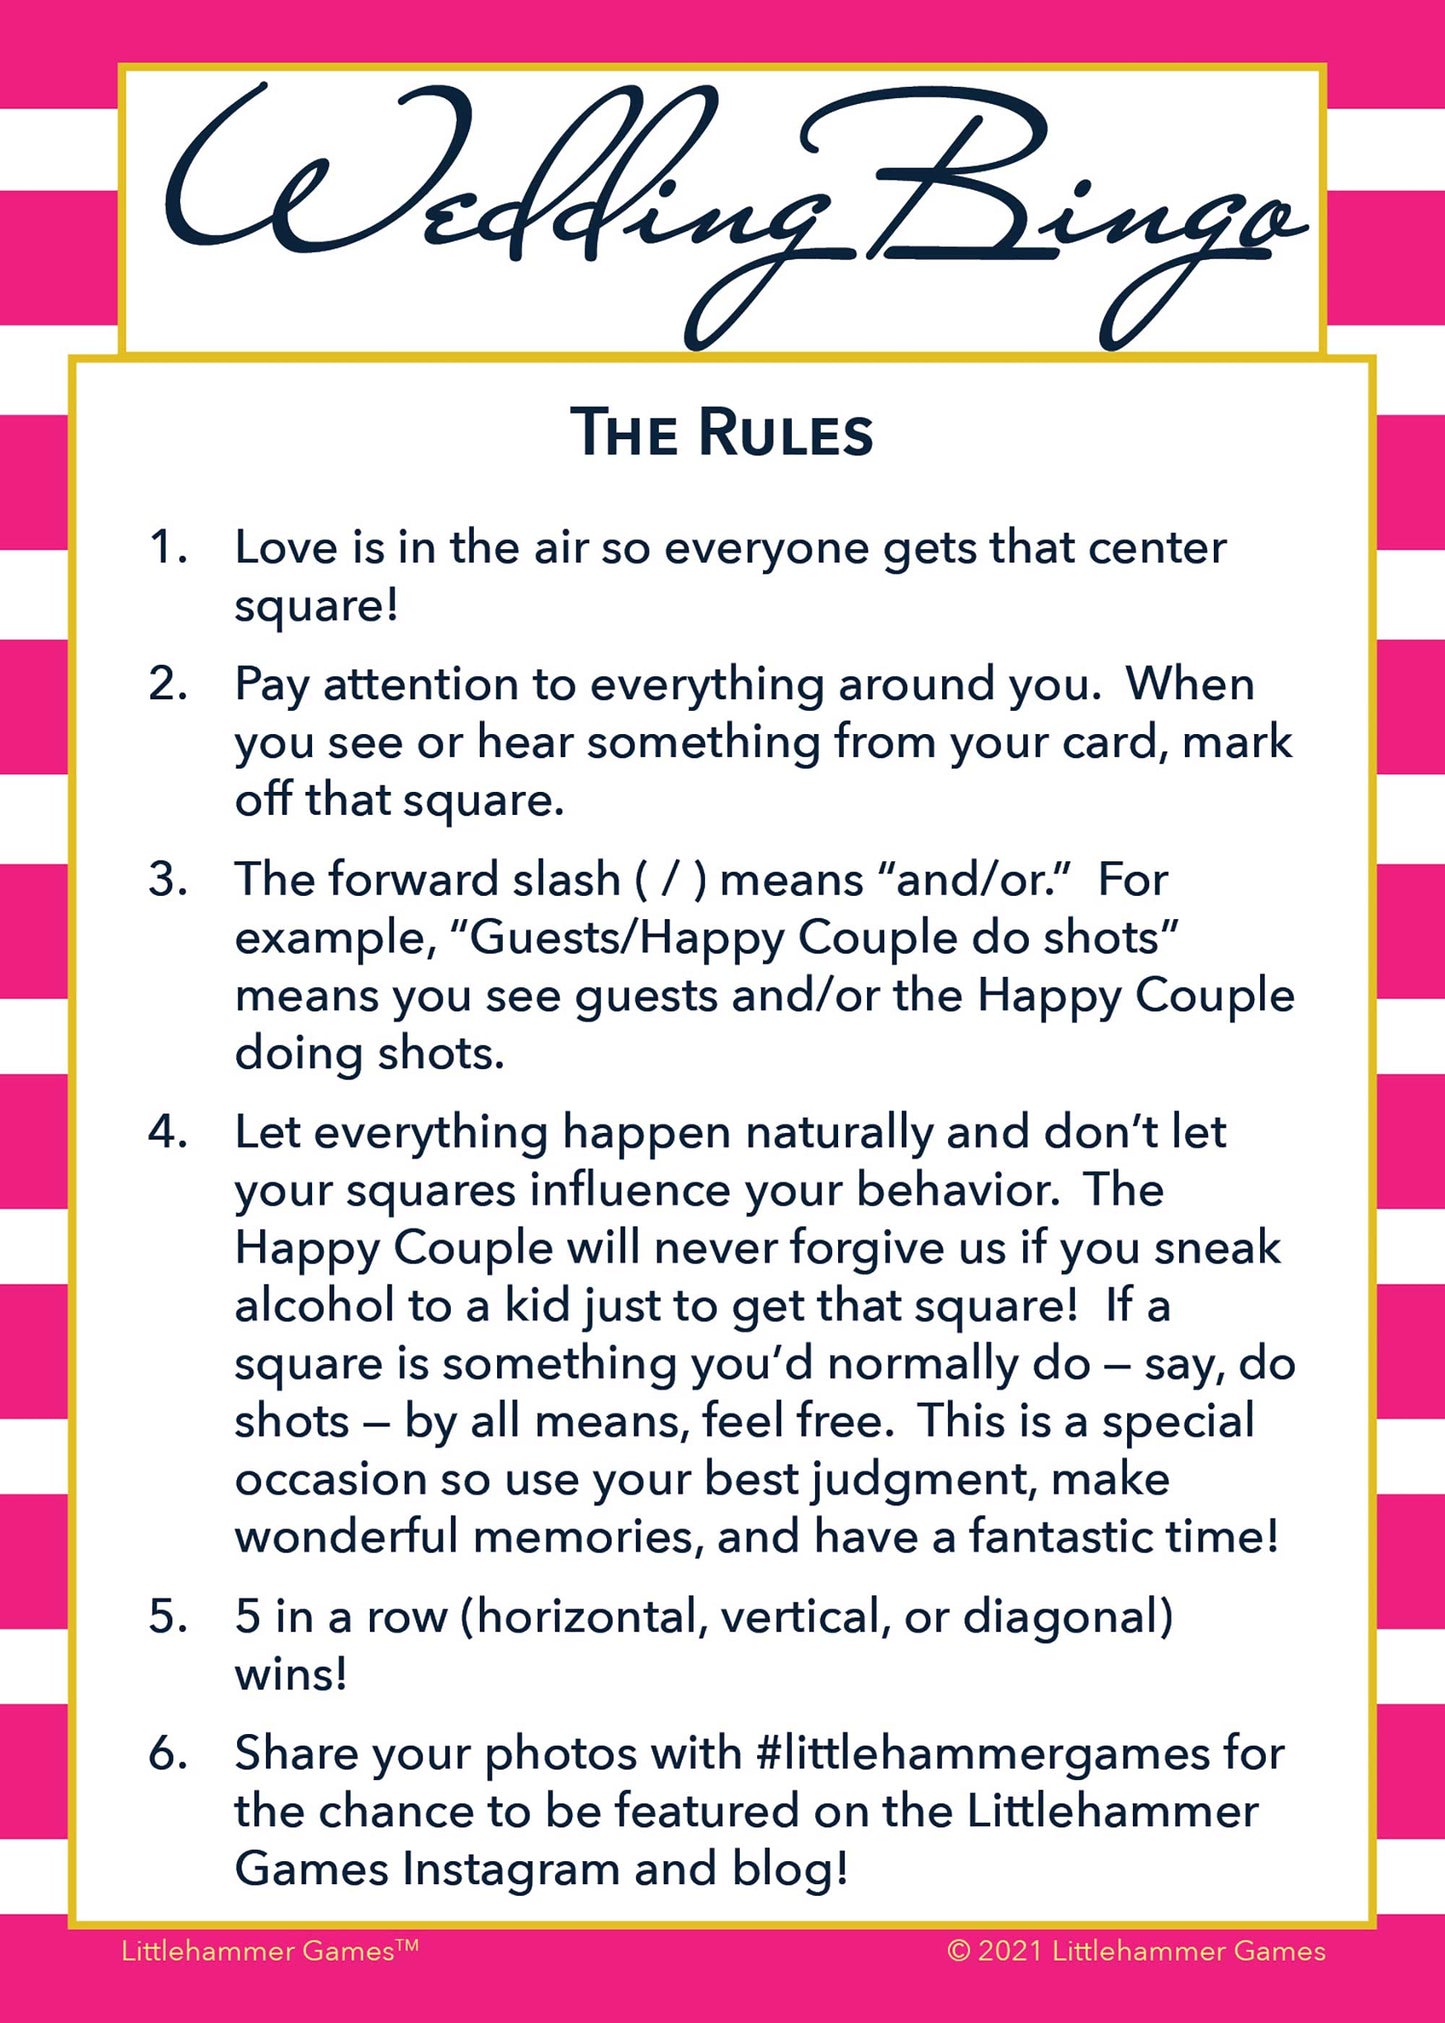 Wedding Bingo rules card on a pink-striped background